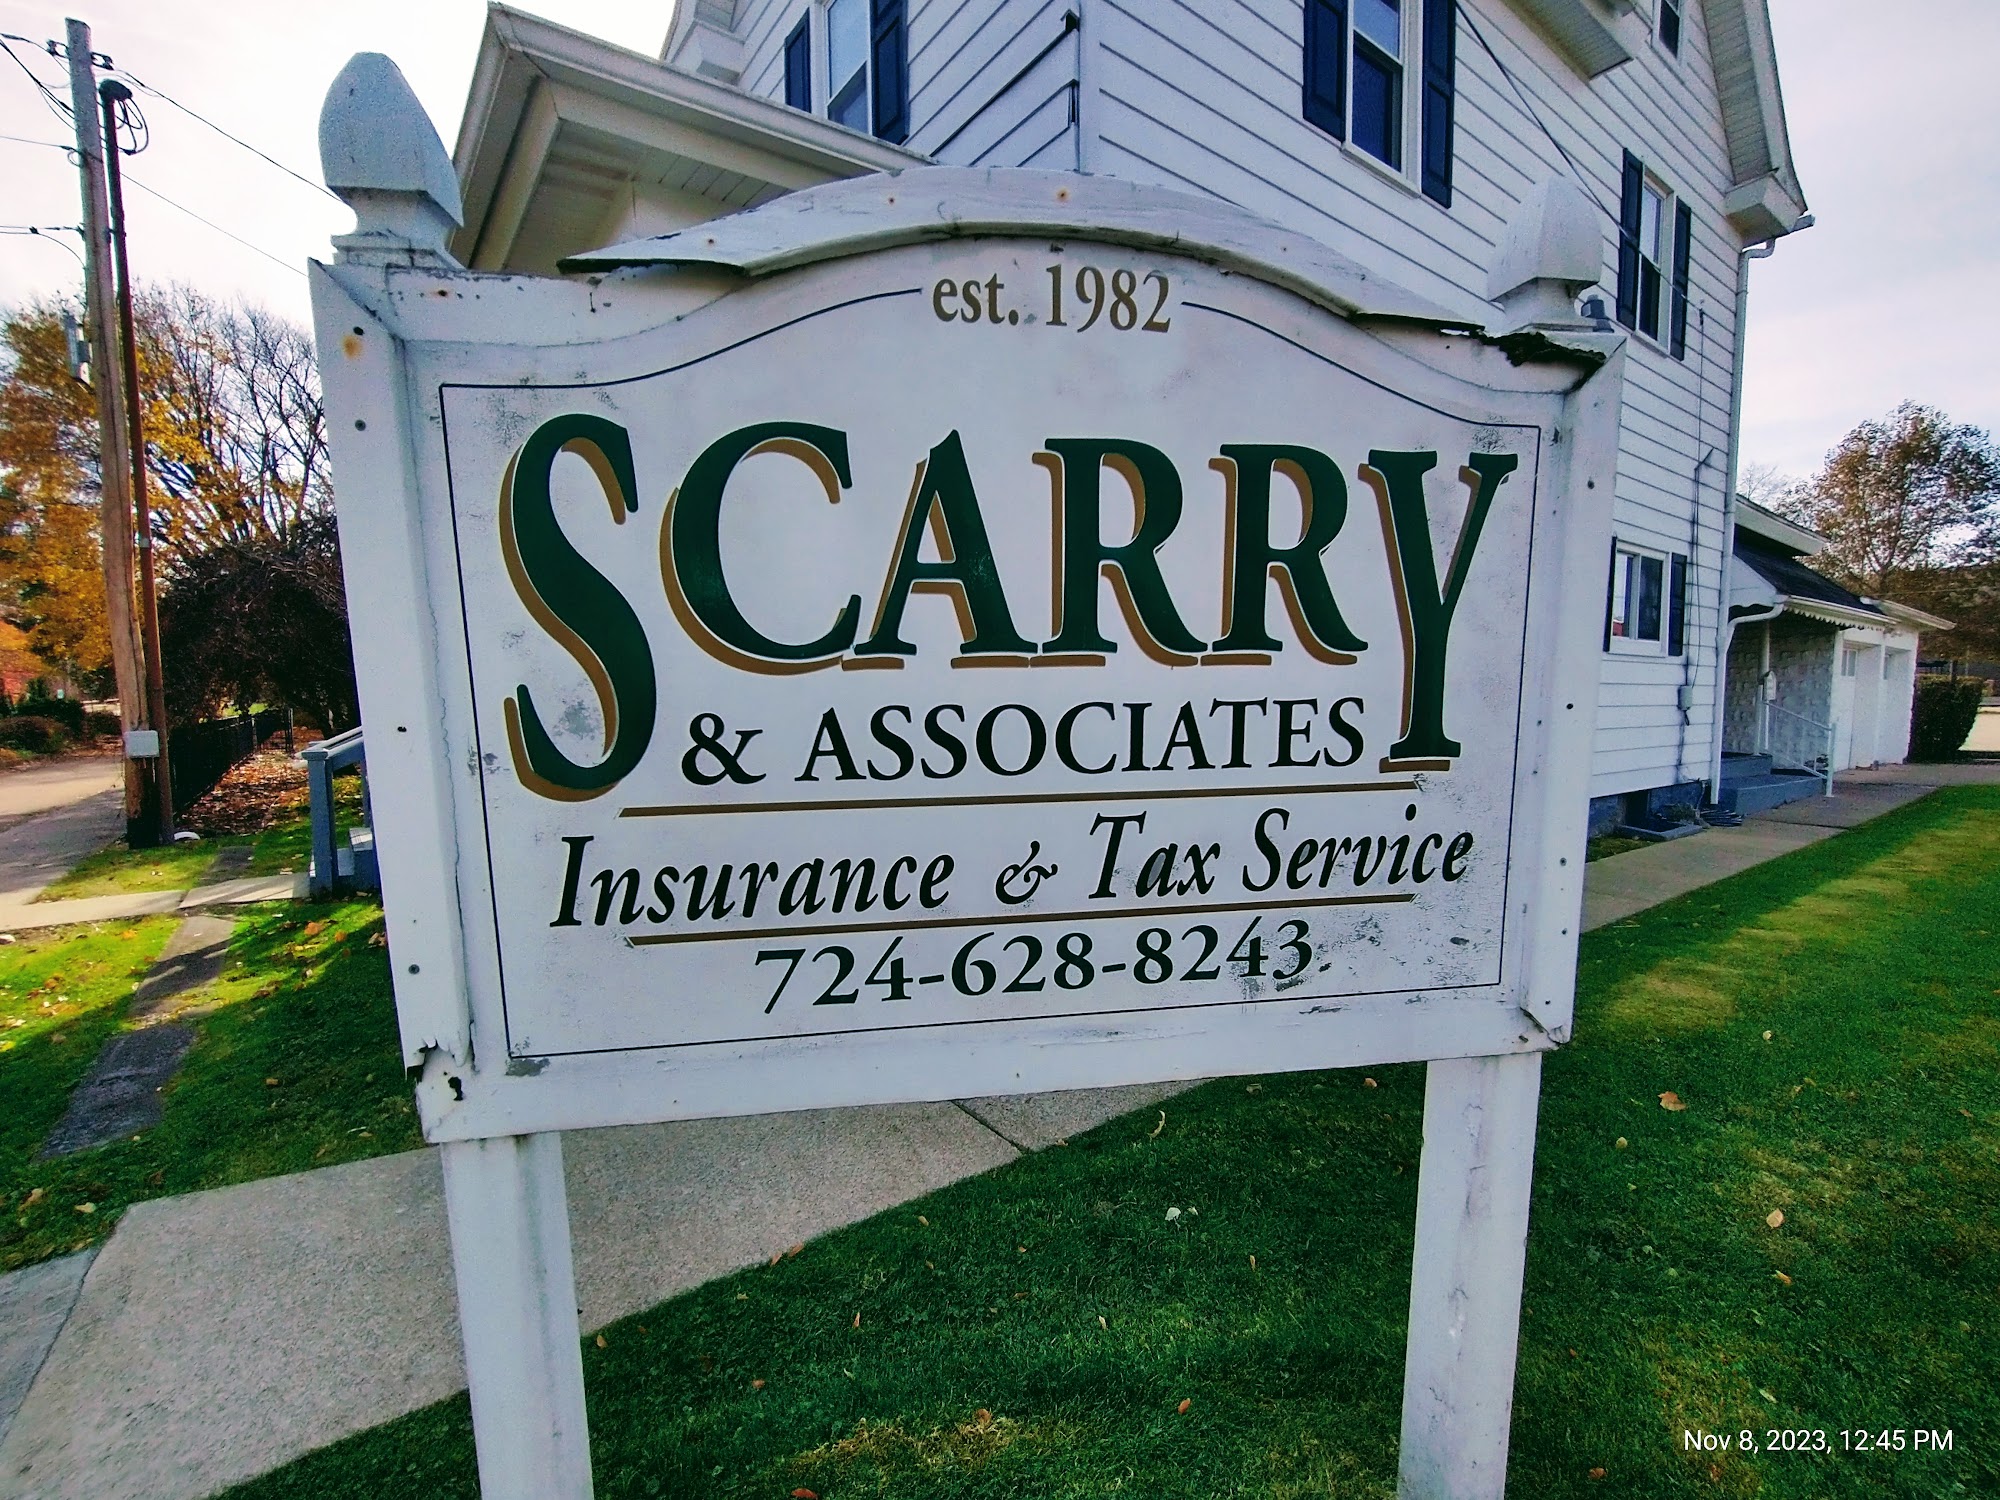 Scarry & Associates 116 S 3rd St, Connellsville Pennsylvania 15425